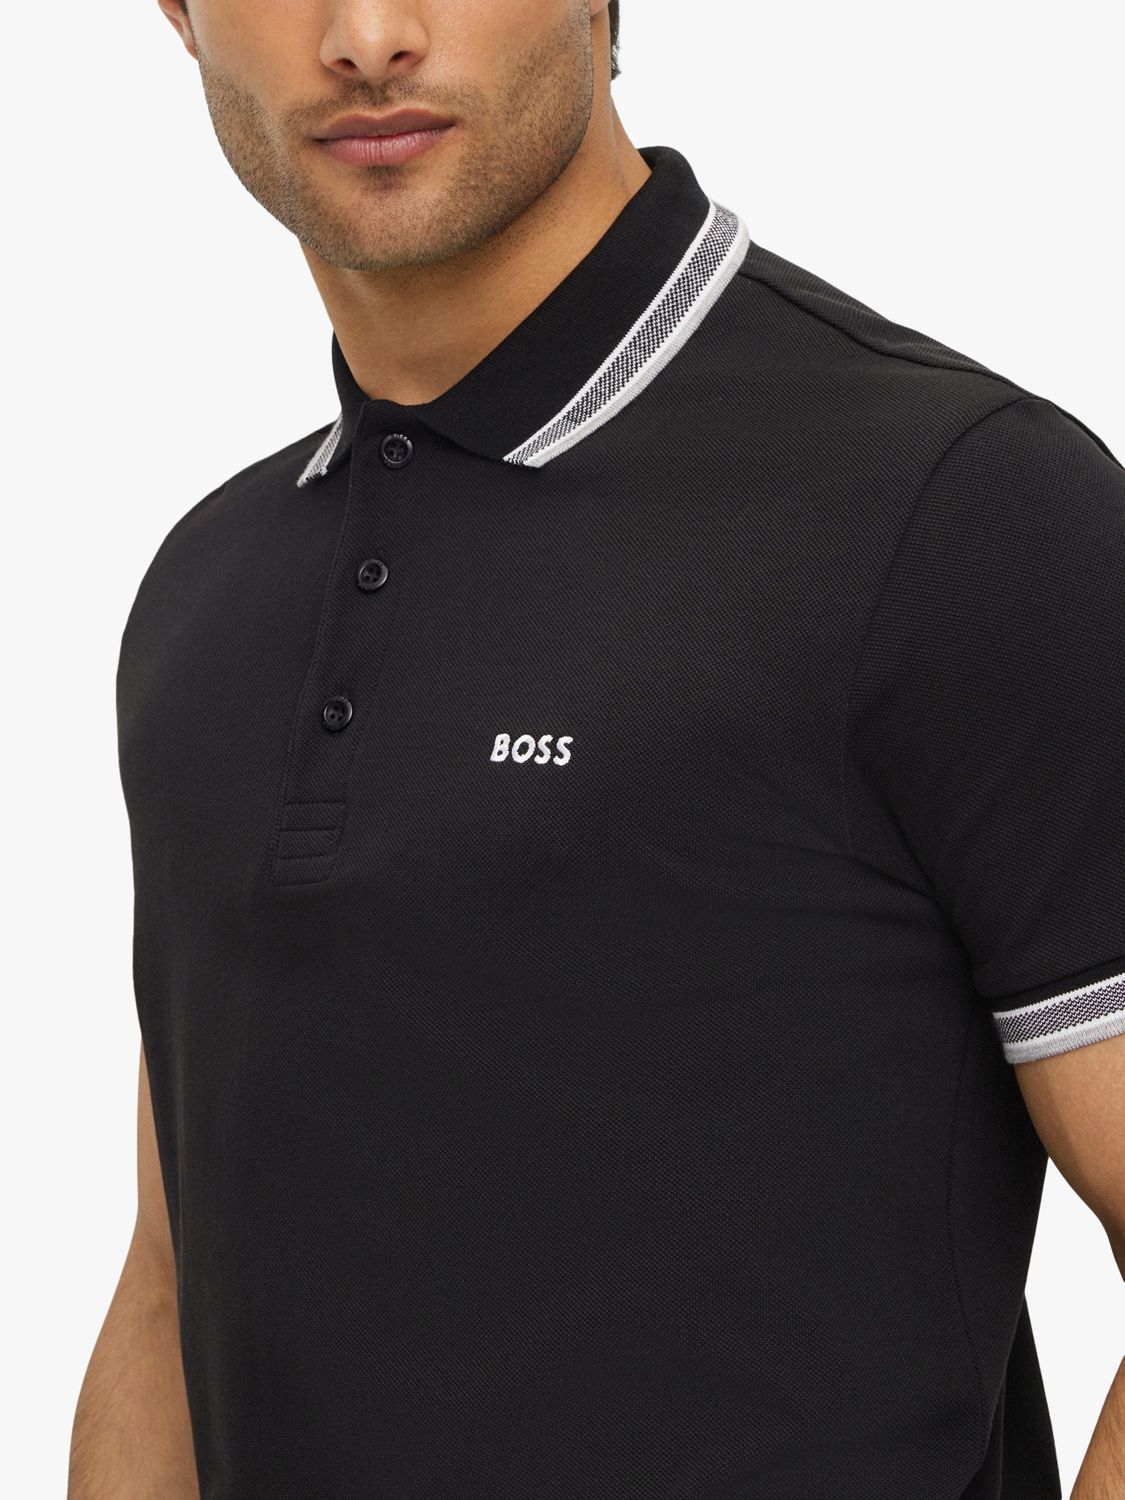 BOSS Paddy Short Sleeve Polo Shirt, Black, S